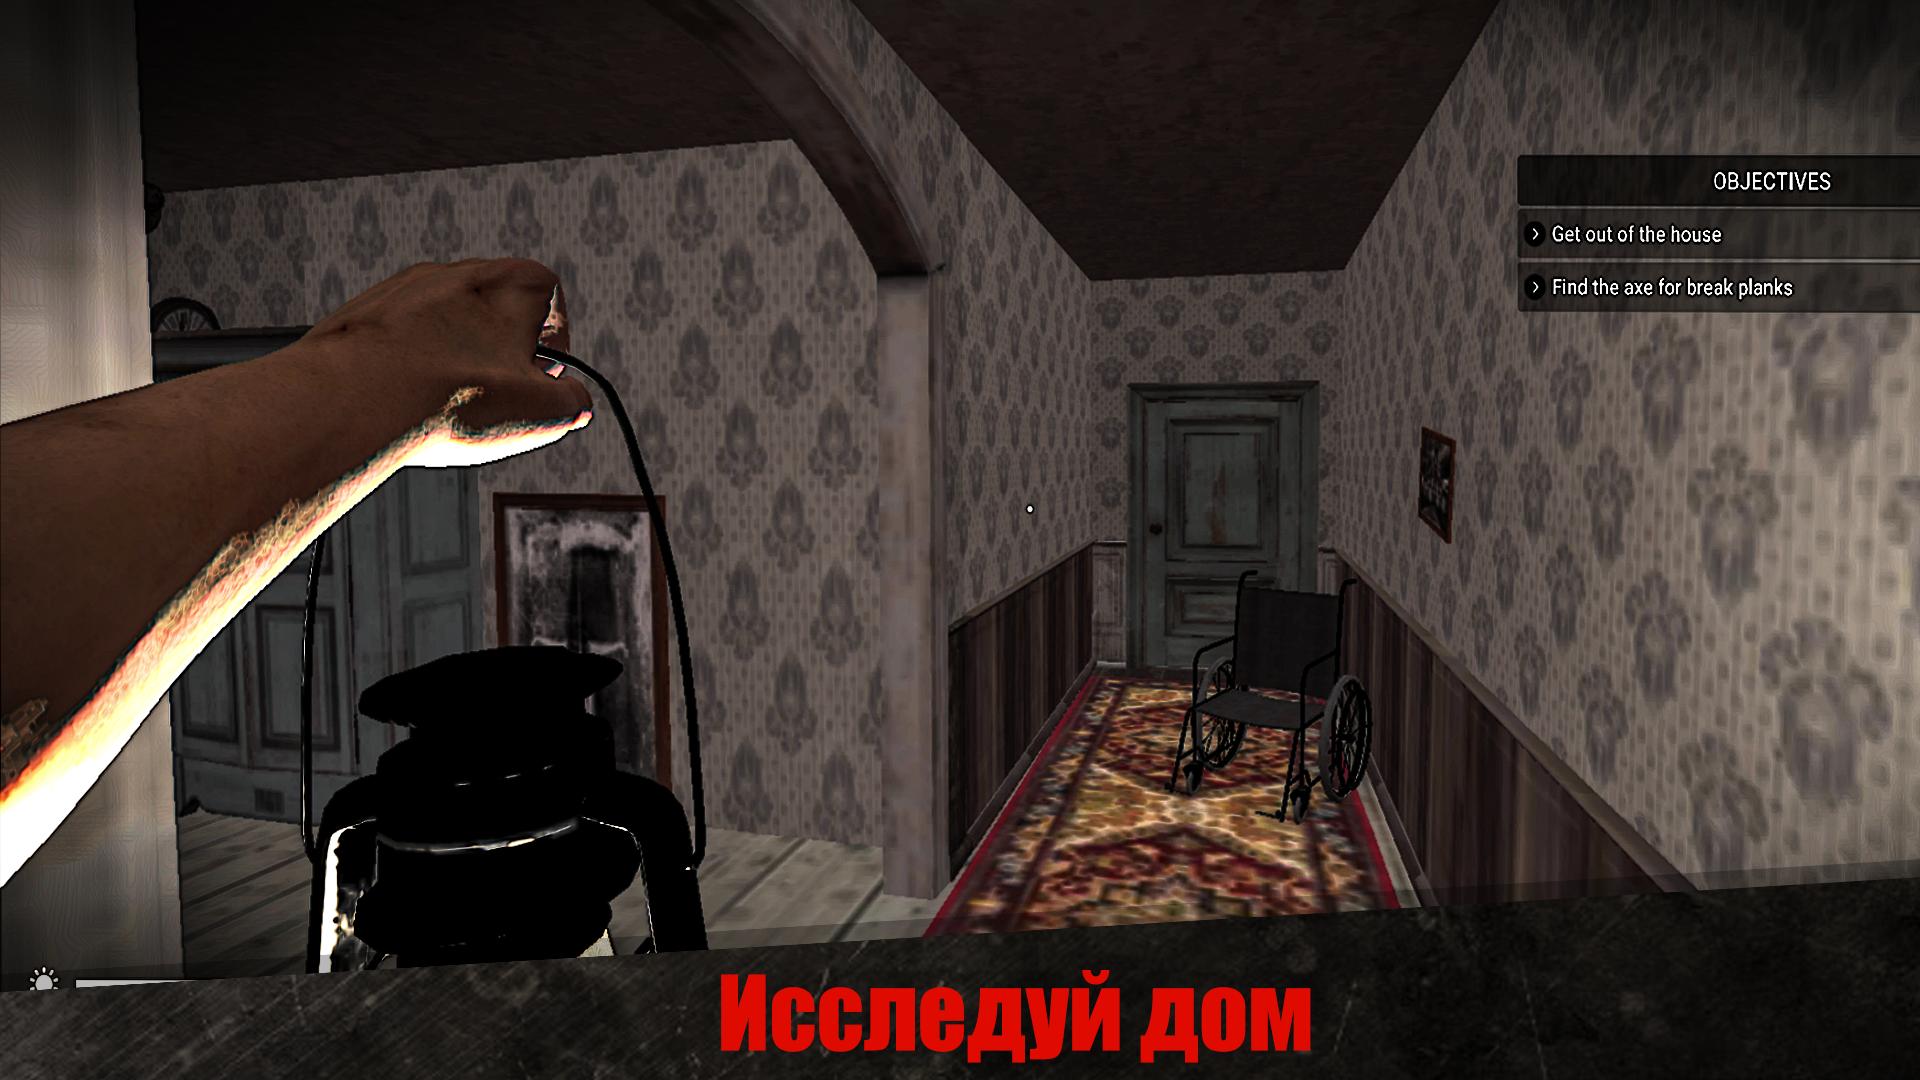 Granny 2021: Scary Granny Survival Horror Game 0.5 Screenshot 8